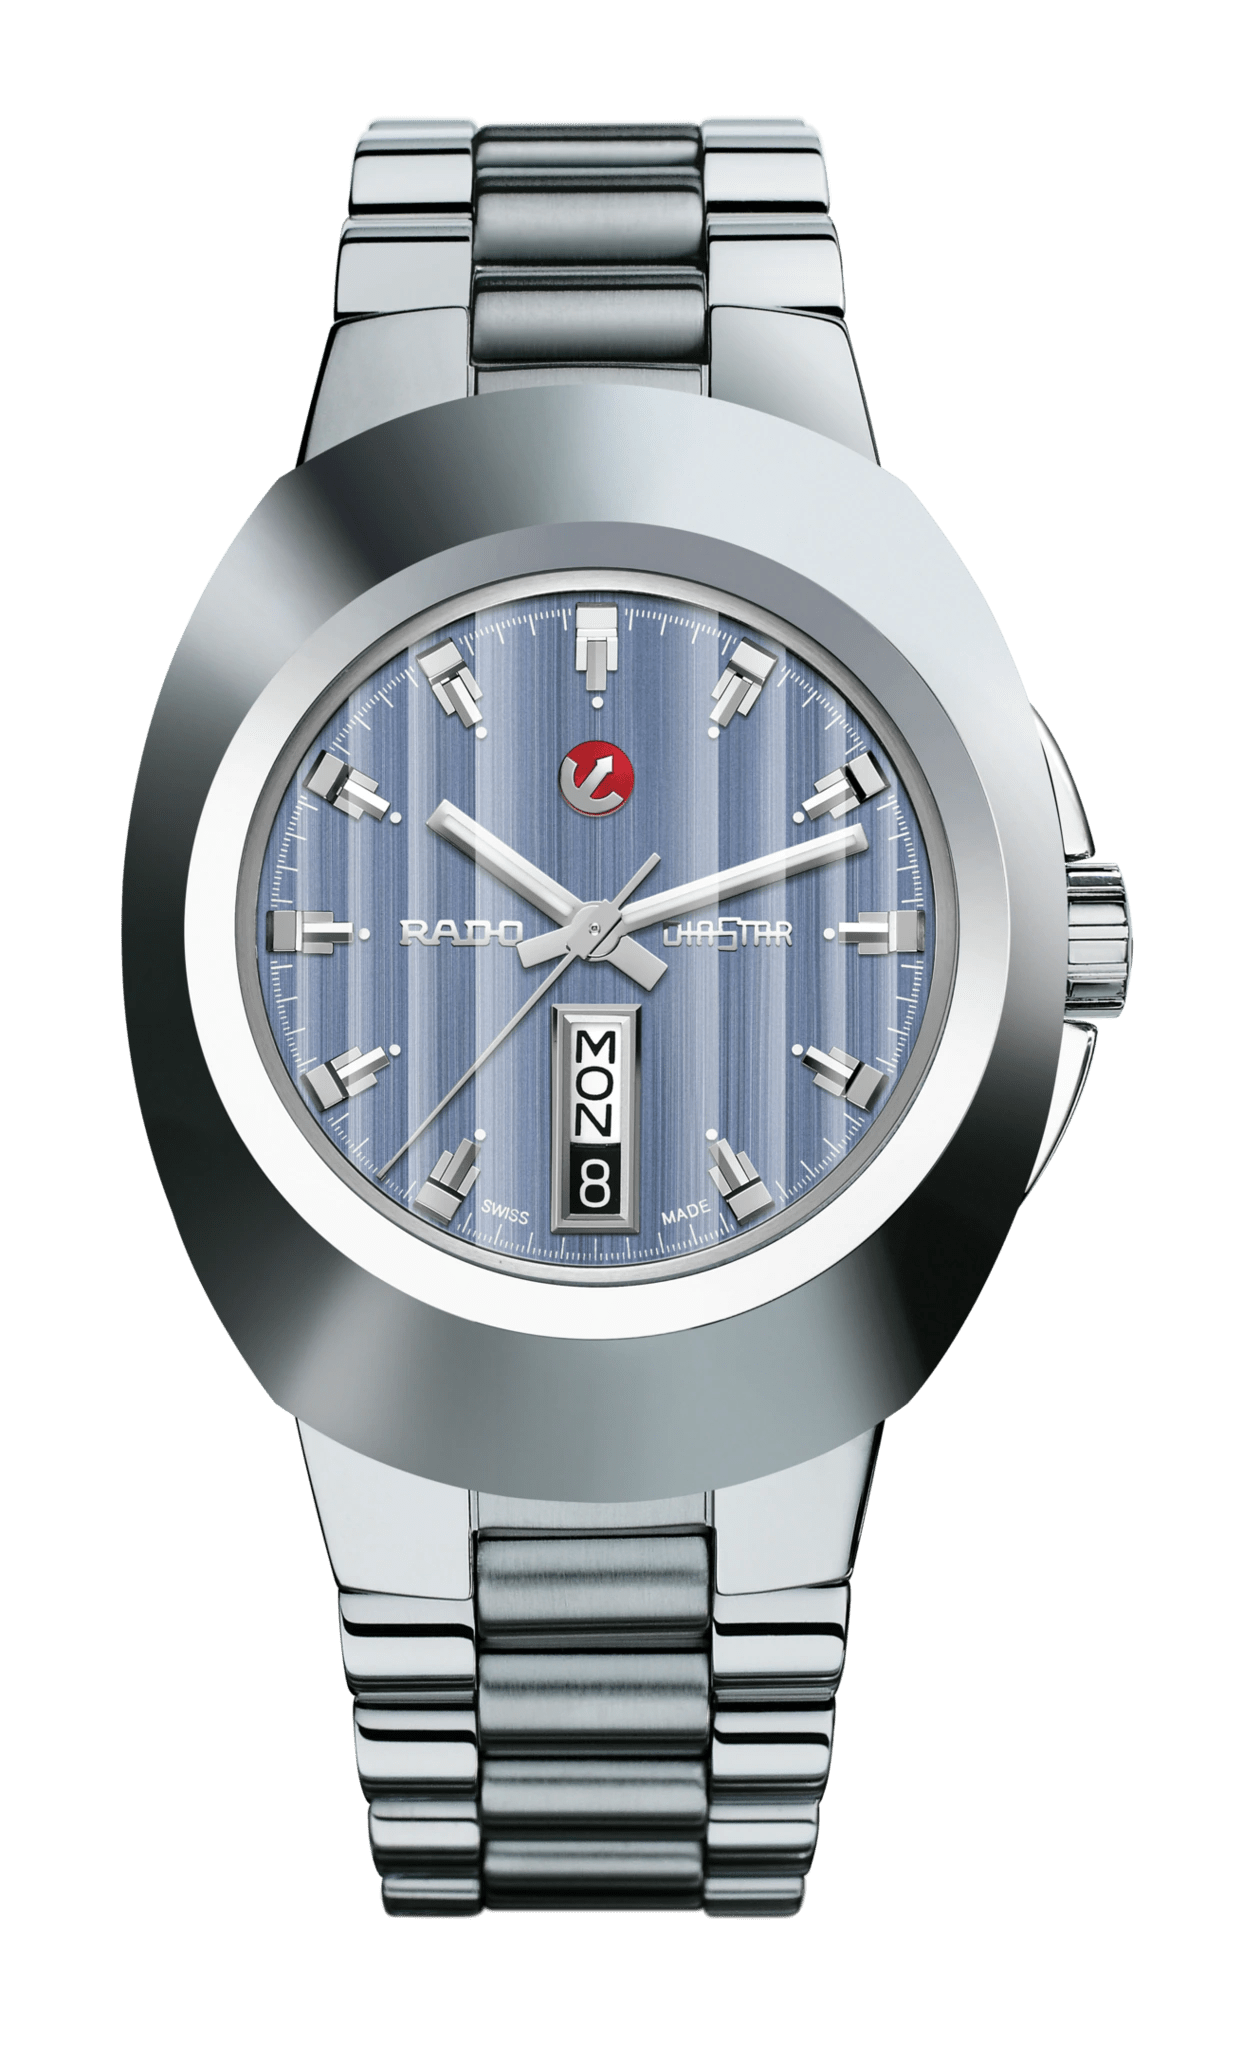 RADO New Original Automatic Limited Edition Blue Dial Men's Watch R12995203